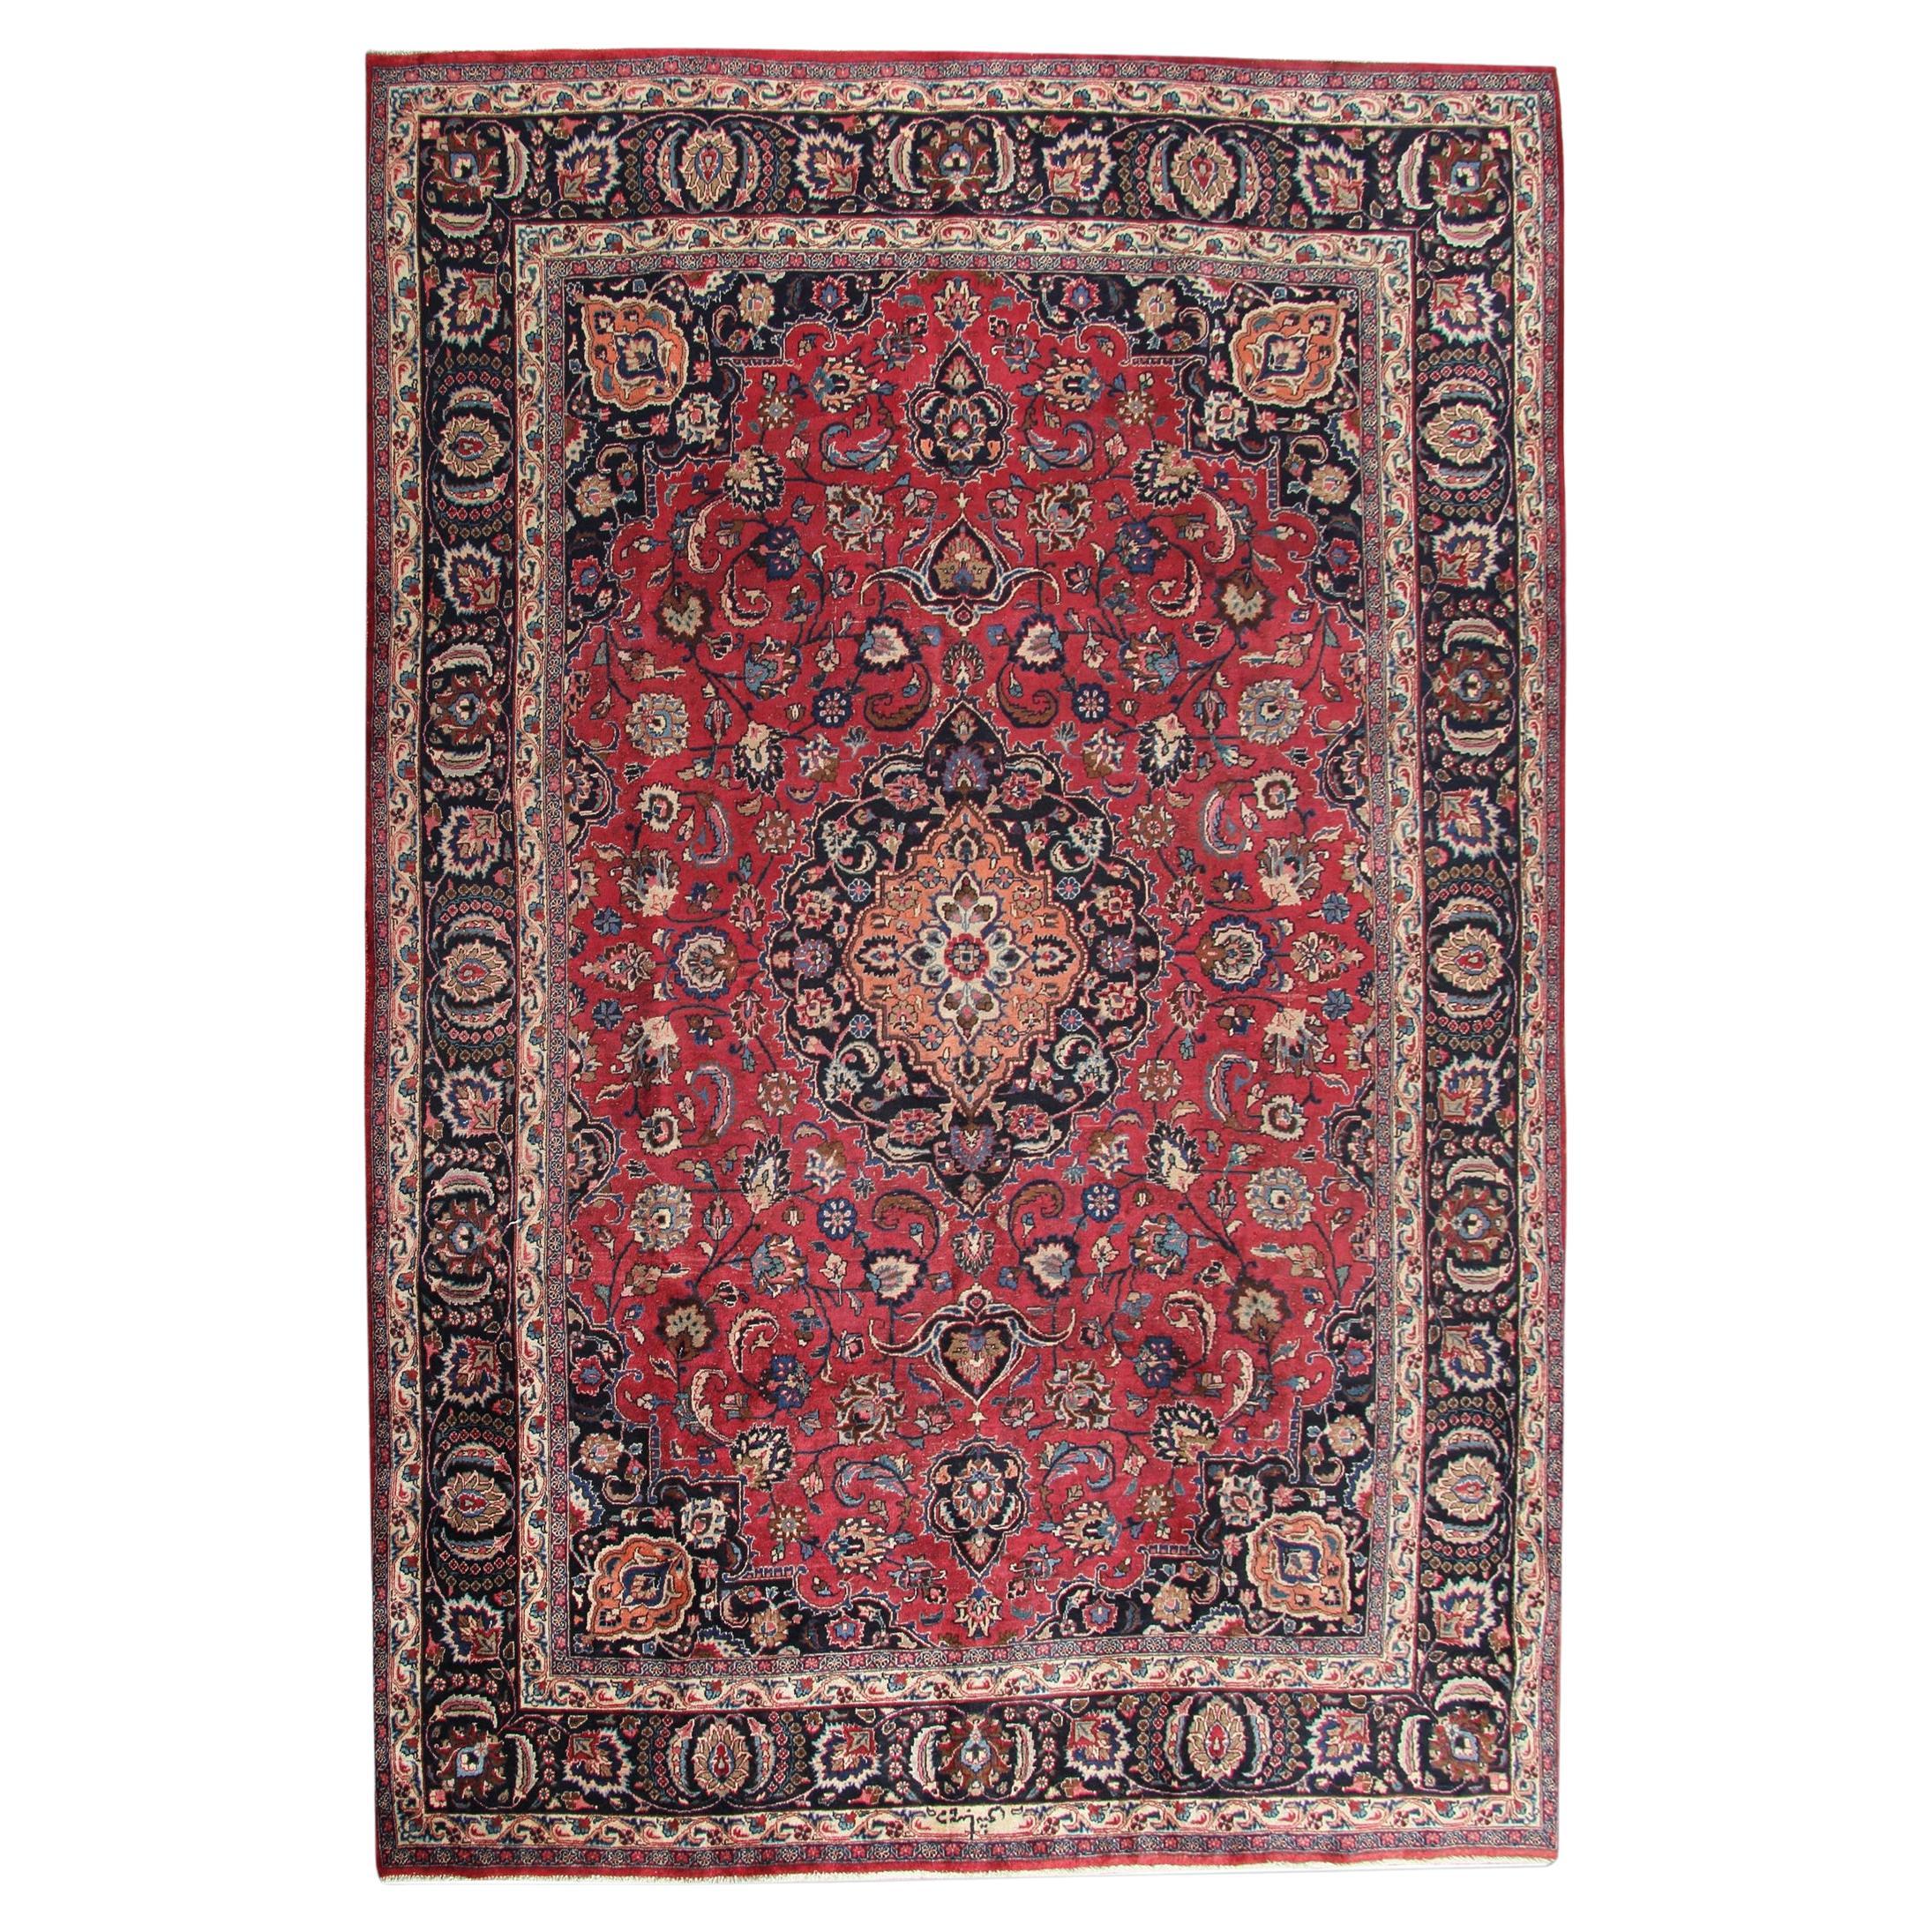 Large Handmade Carpet Traditional Red Wool Rug Oriental Carpet